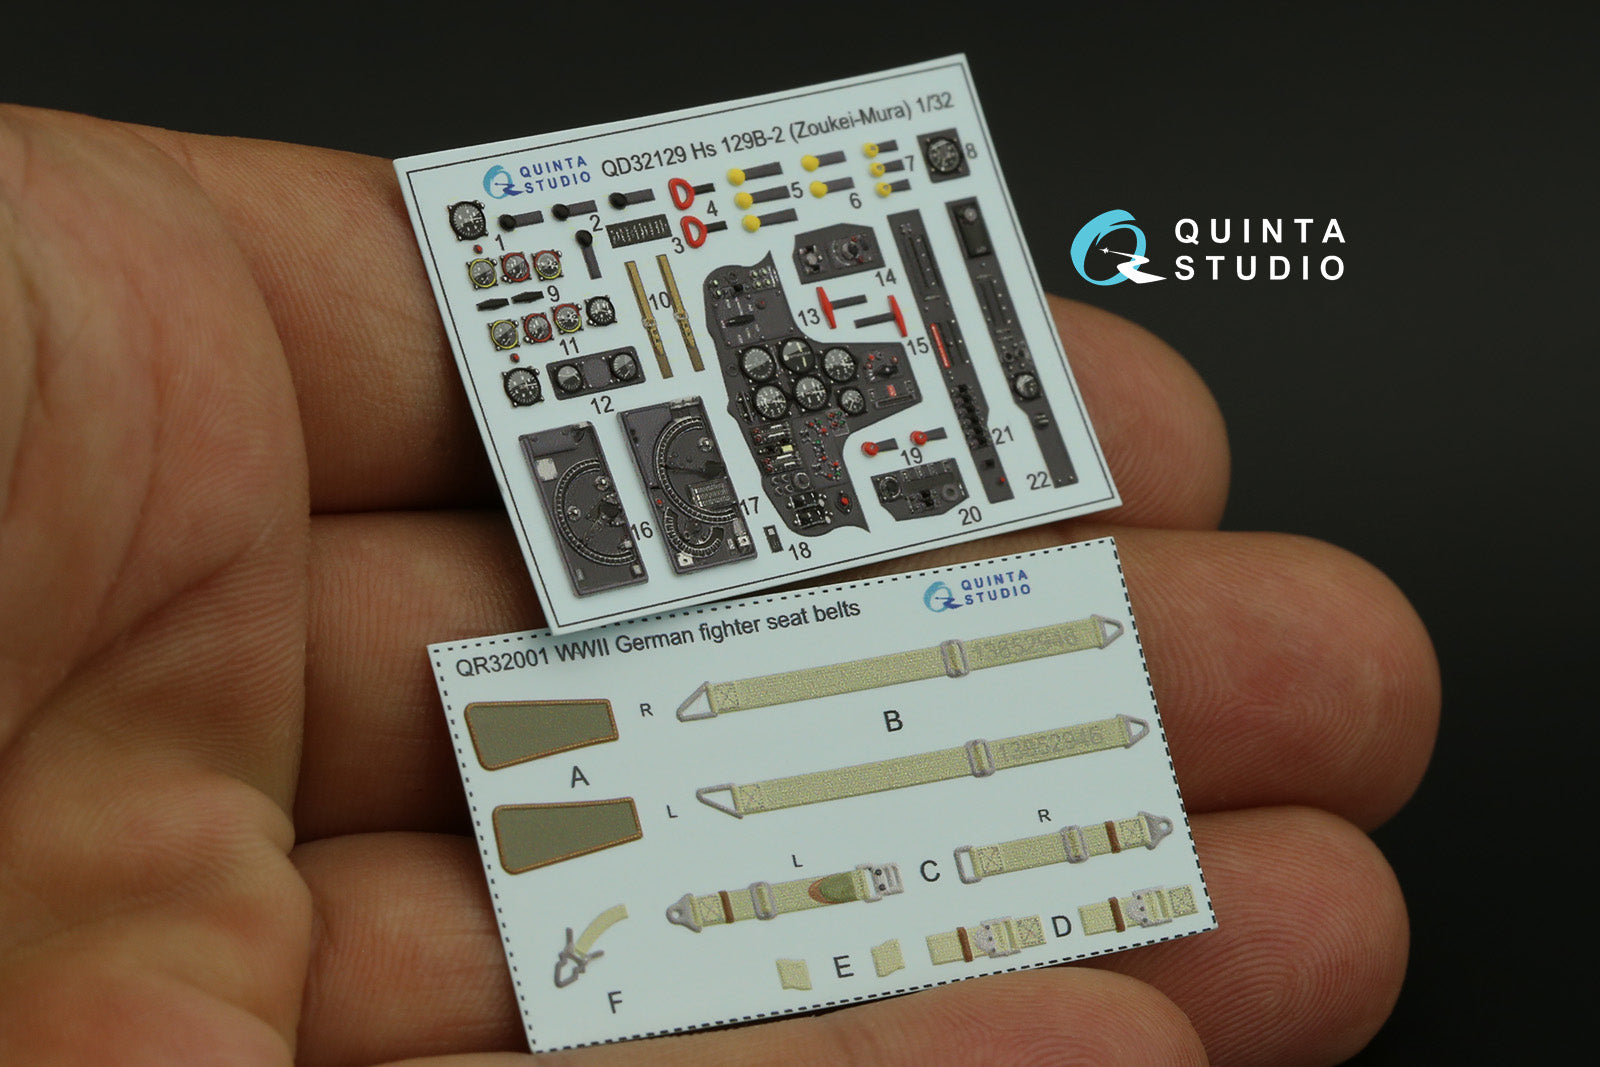 Quinta Studio - 1/32 Hs 129B-2 QD32129 for Zoukei-Mura kit